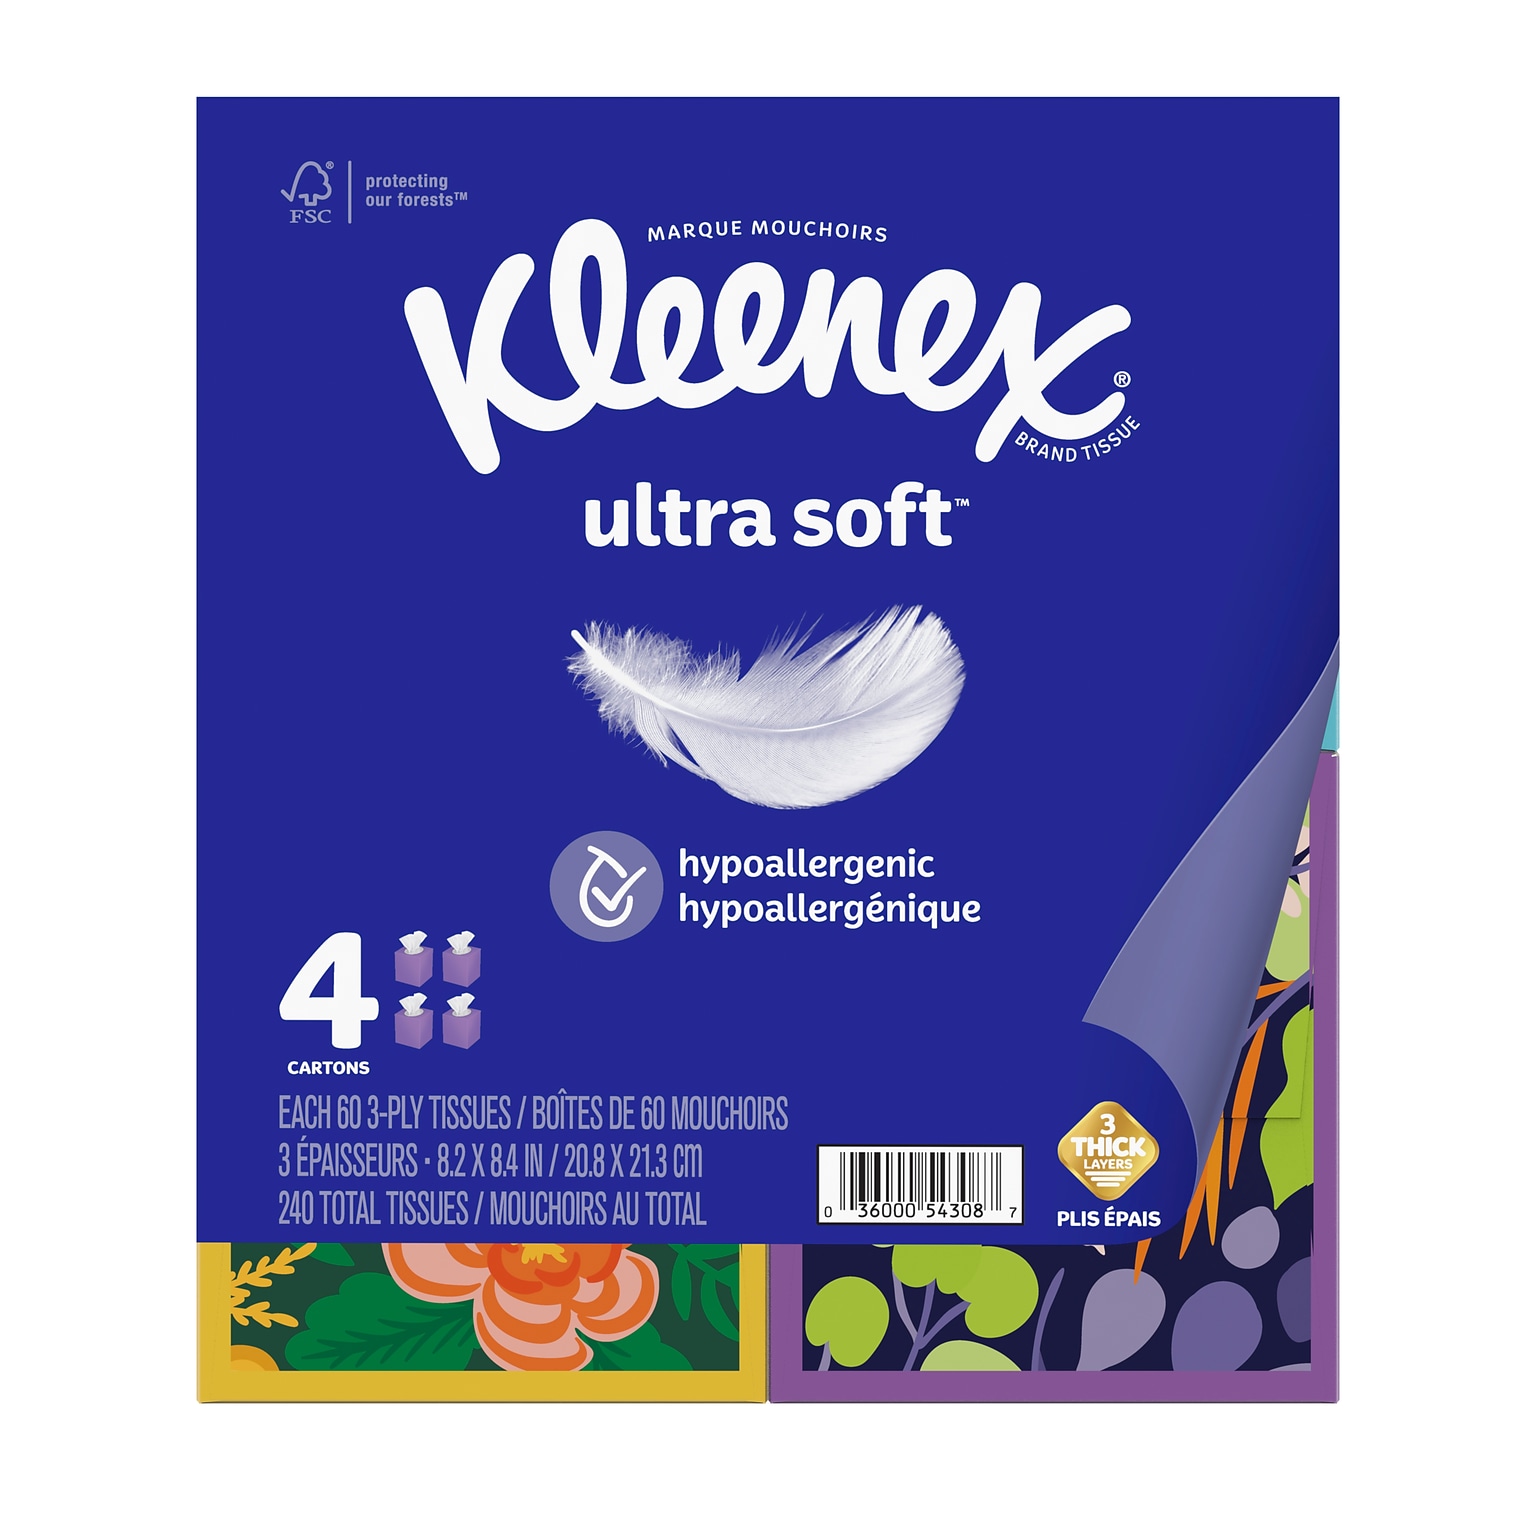 Kleenex Ultra Soft Facial Tissue, 3-Ply, 60 Sheets/Box, 4 Boxes/Pack (54308)